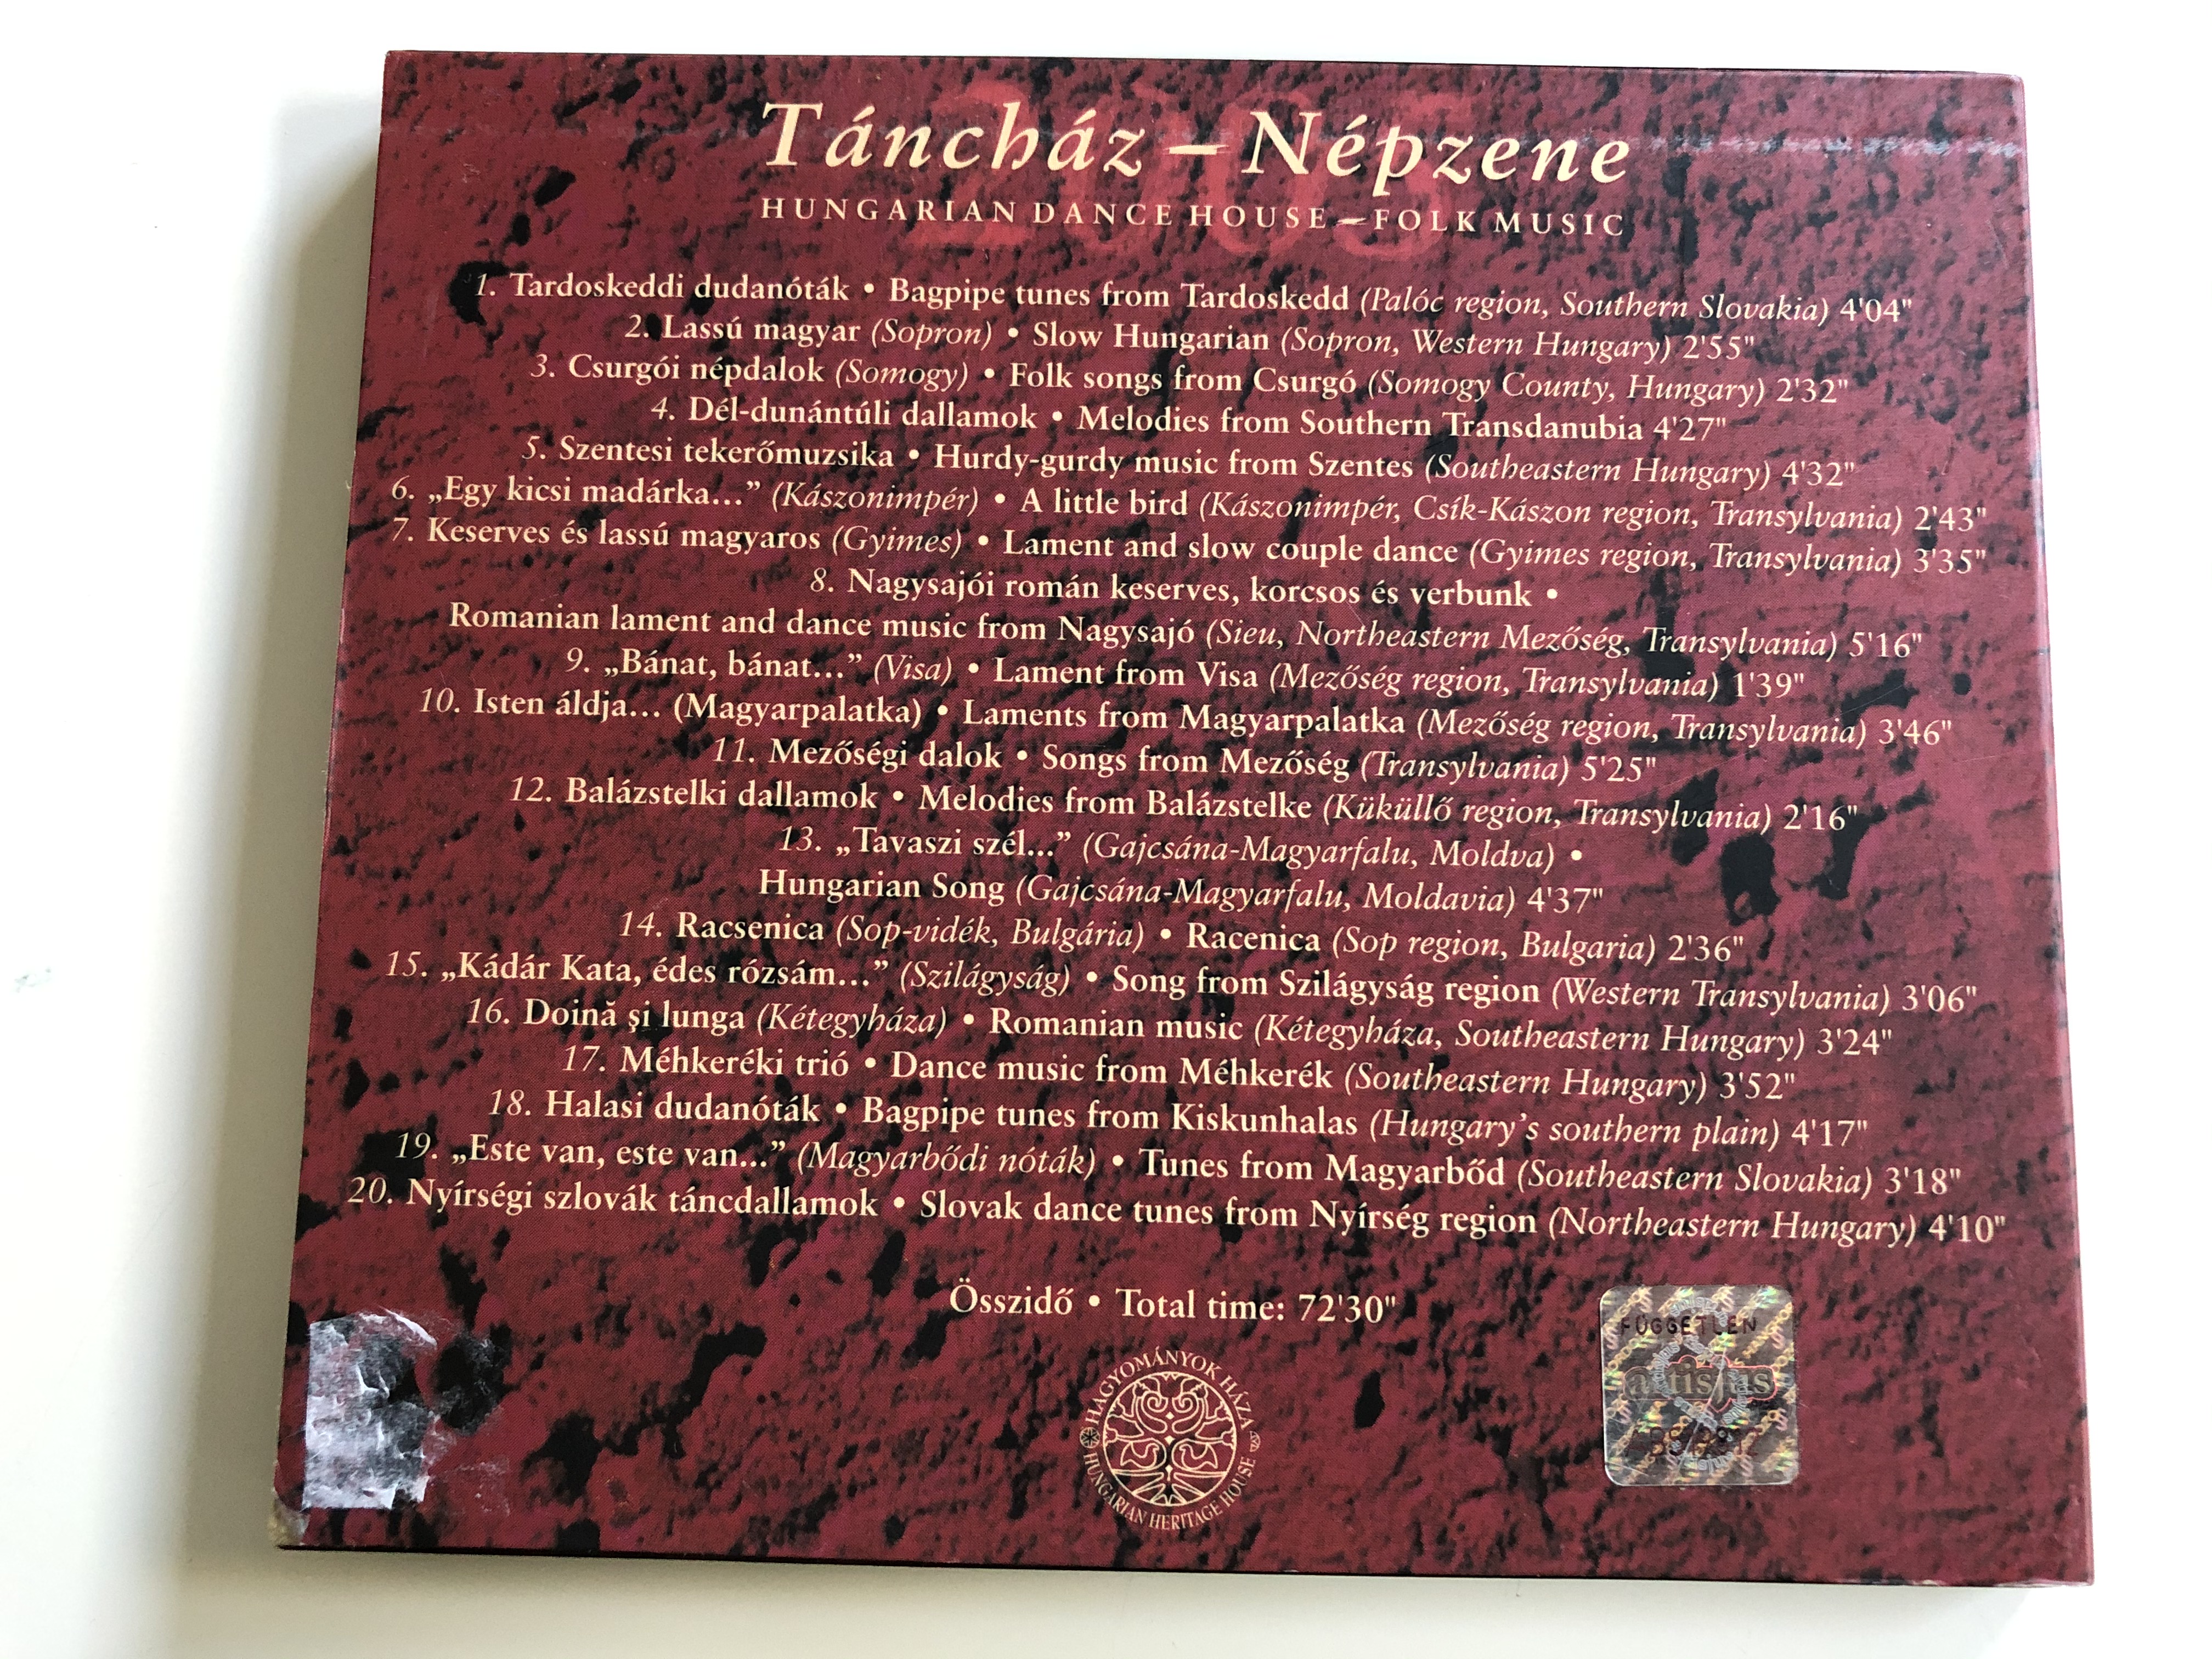 t-nch-z-n-pzene-2005-hungarian-dance-house-folk-music-hagyom-nyok-h-za-audio-cd-2005-hhcd0104-7-.jpg